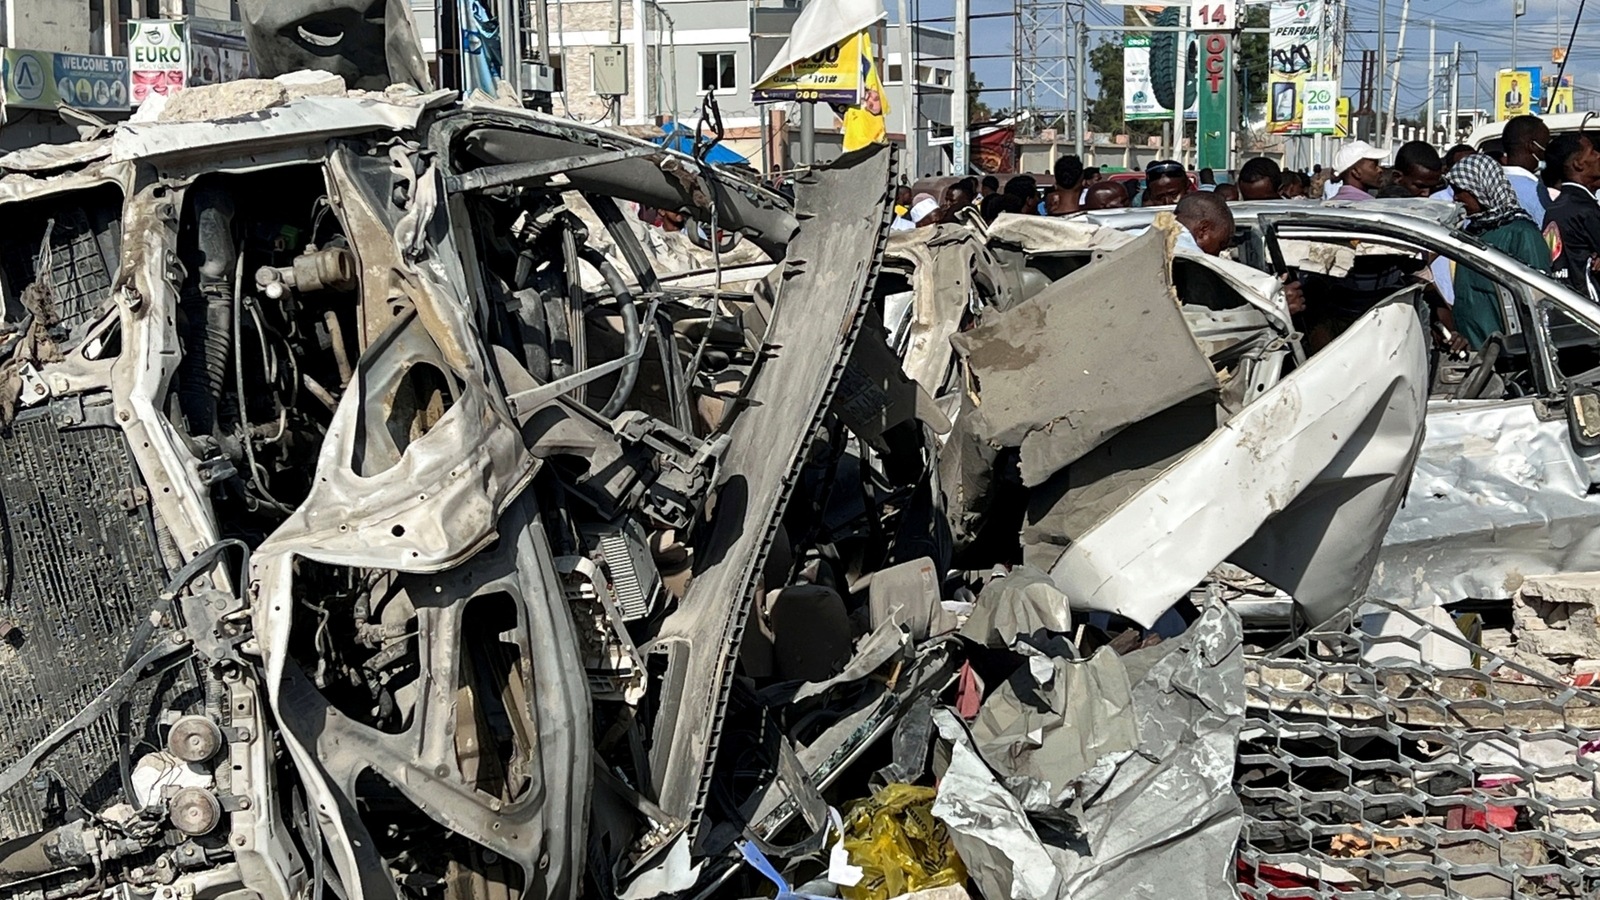 car-bombs-at-busy-somalia-market-intersection-kills-at-least-100